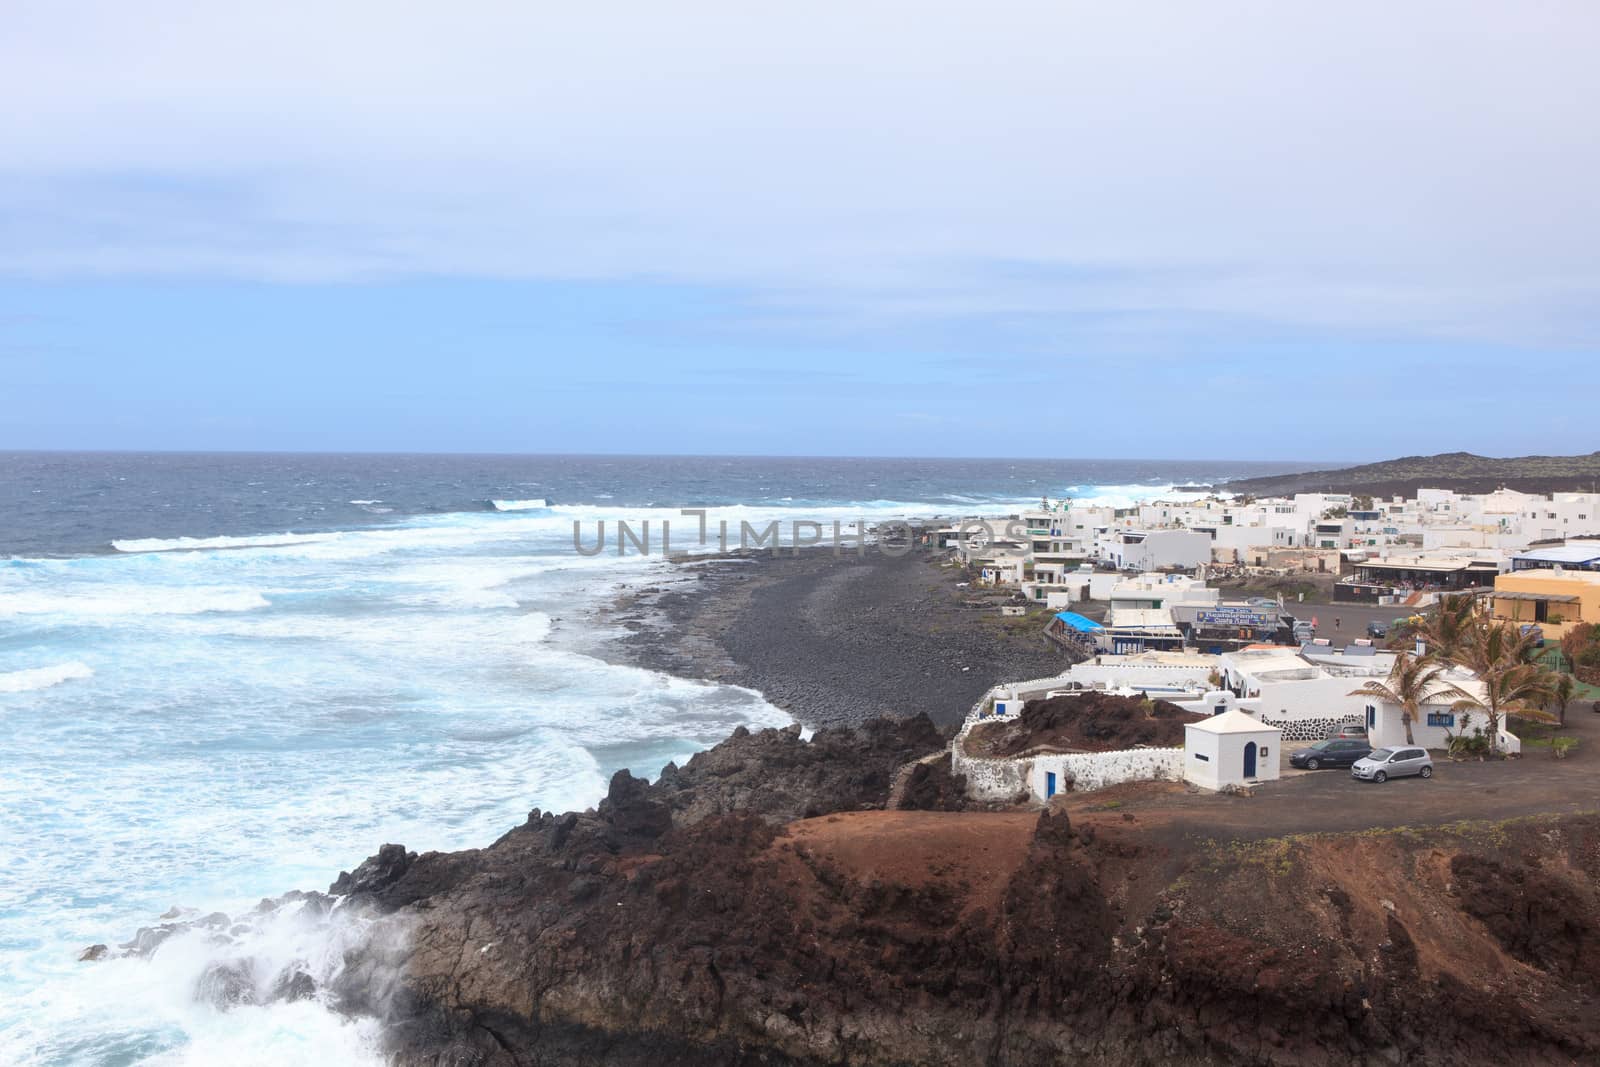 El Golfo is a landmark on the island of Lanzarote, Spain